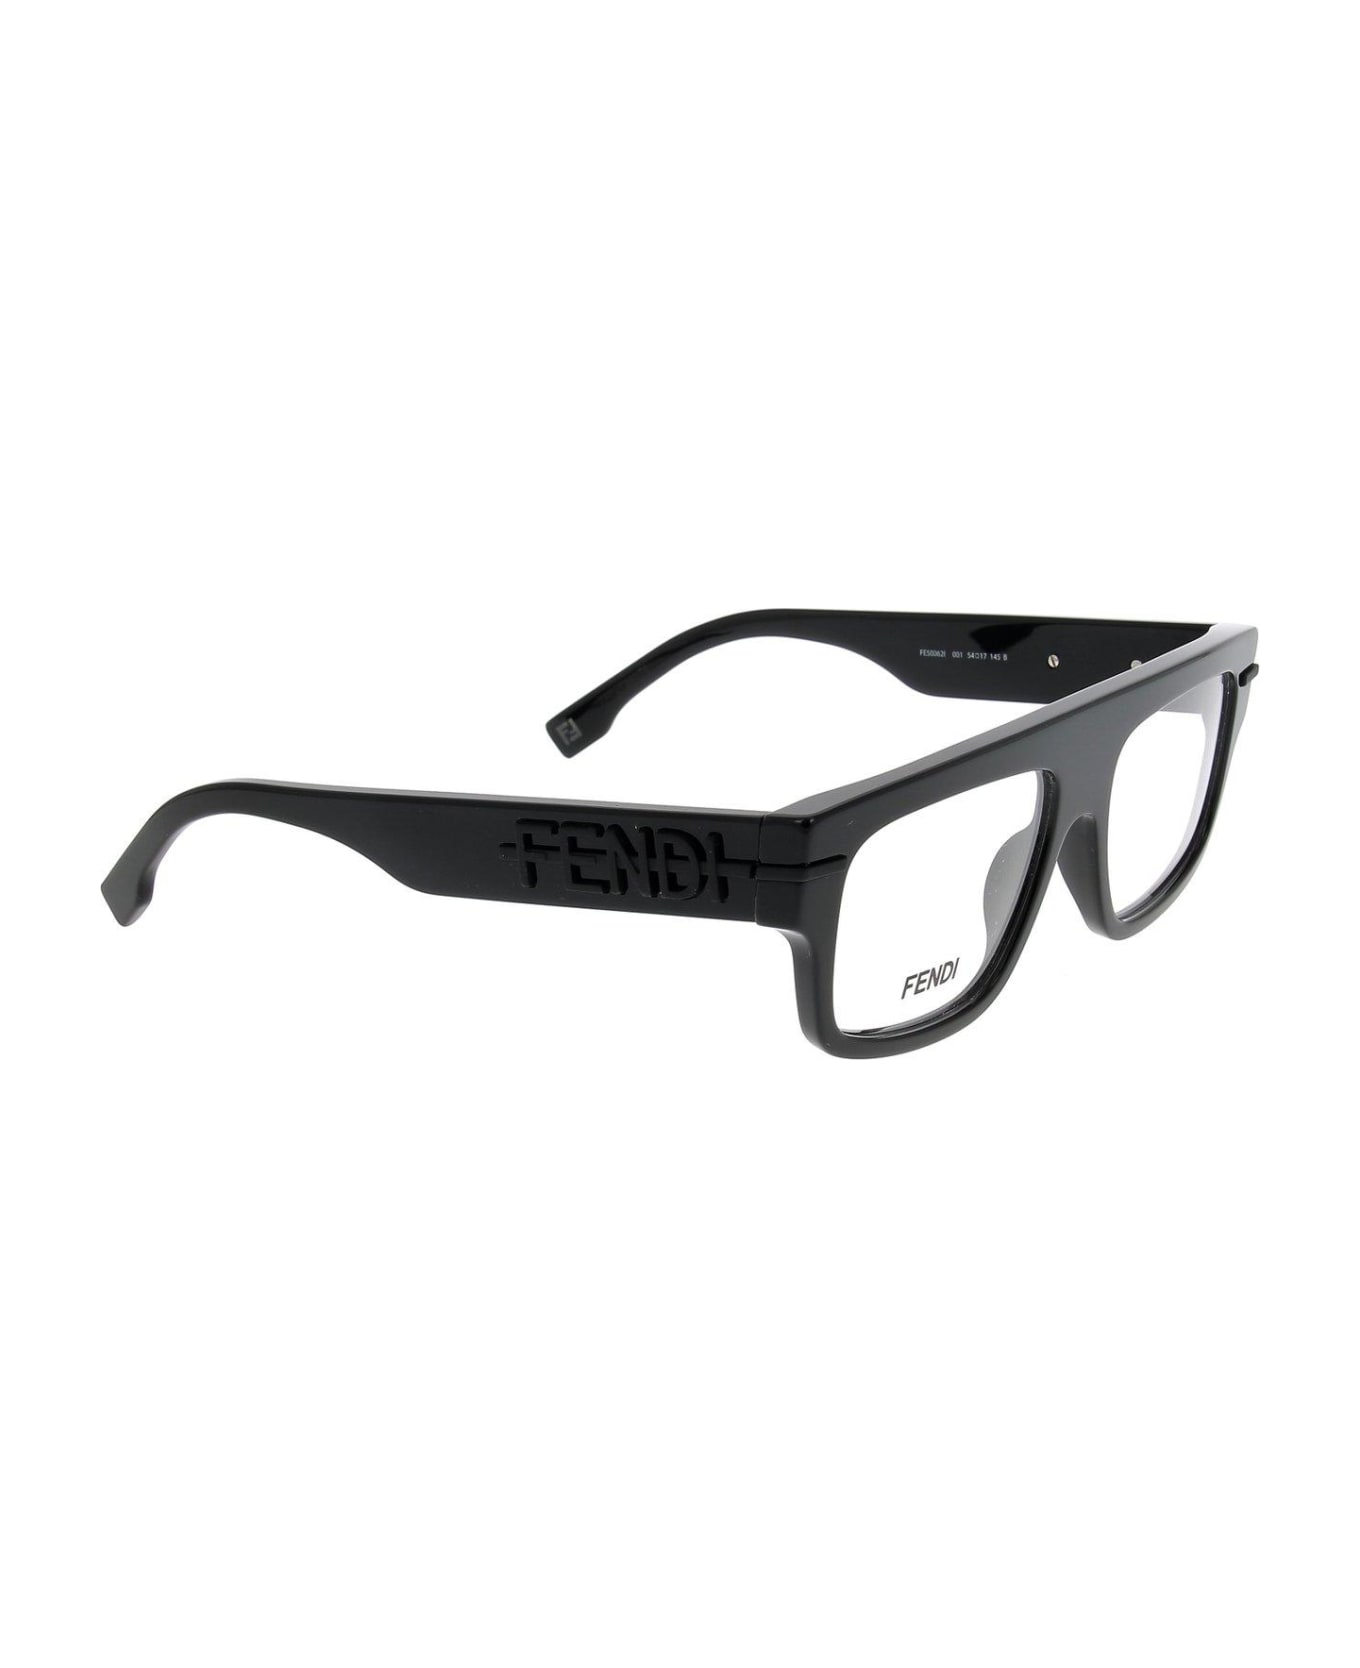 Fendi Eyewear Rectangular-frame Glasses - 001